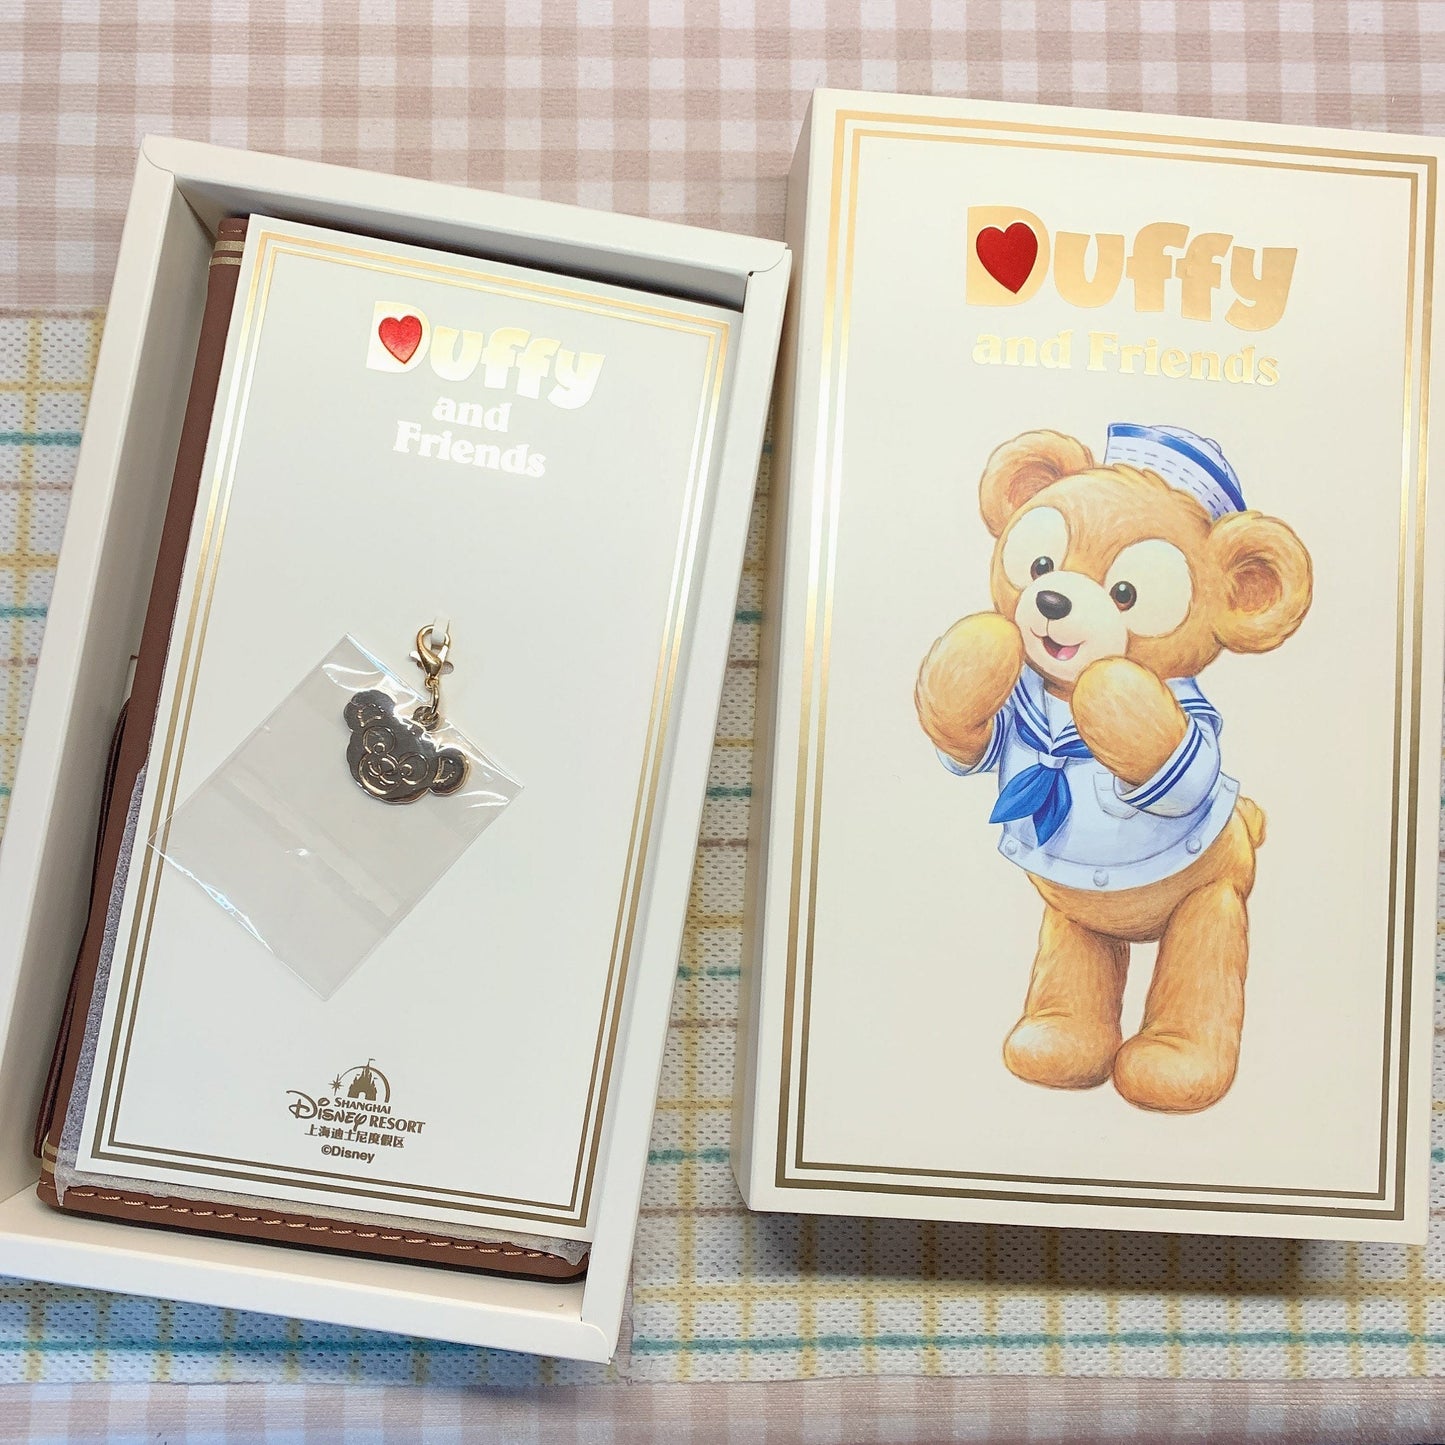 Shanghai Disneyland Duffy and friends Traveler's notebook（normal size）set